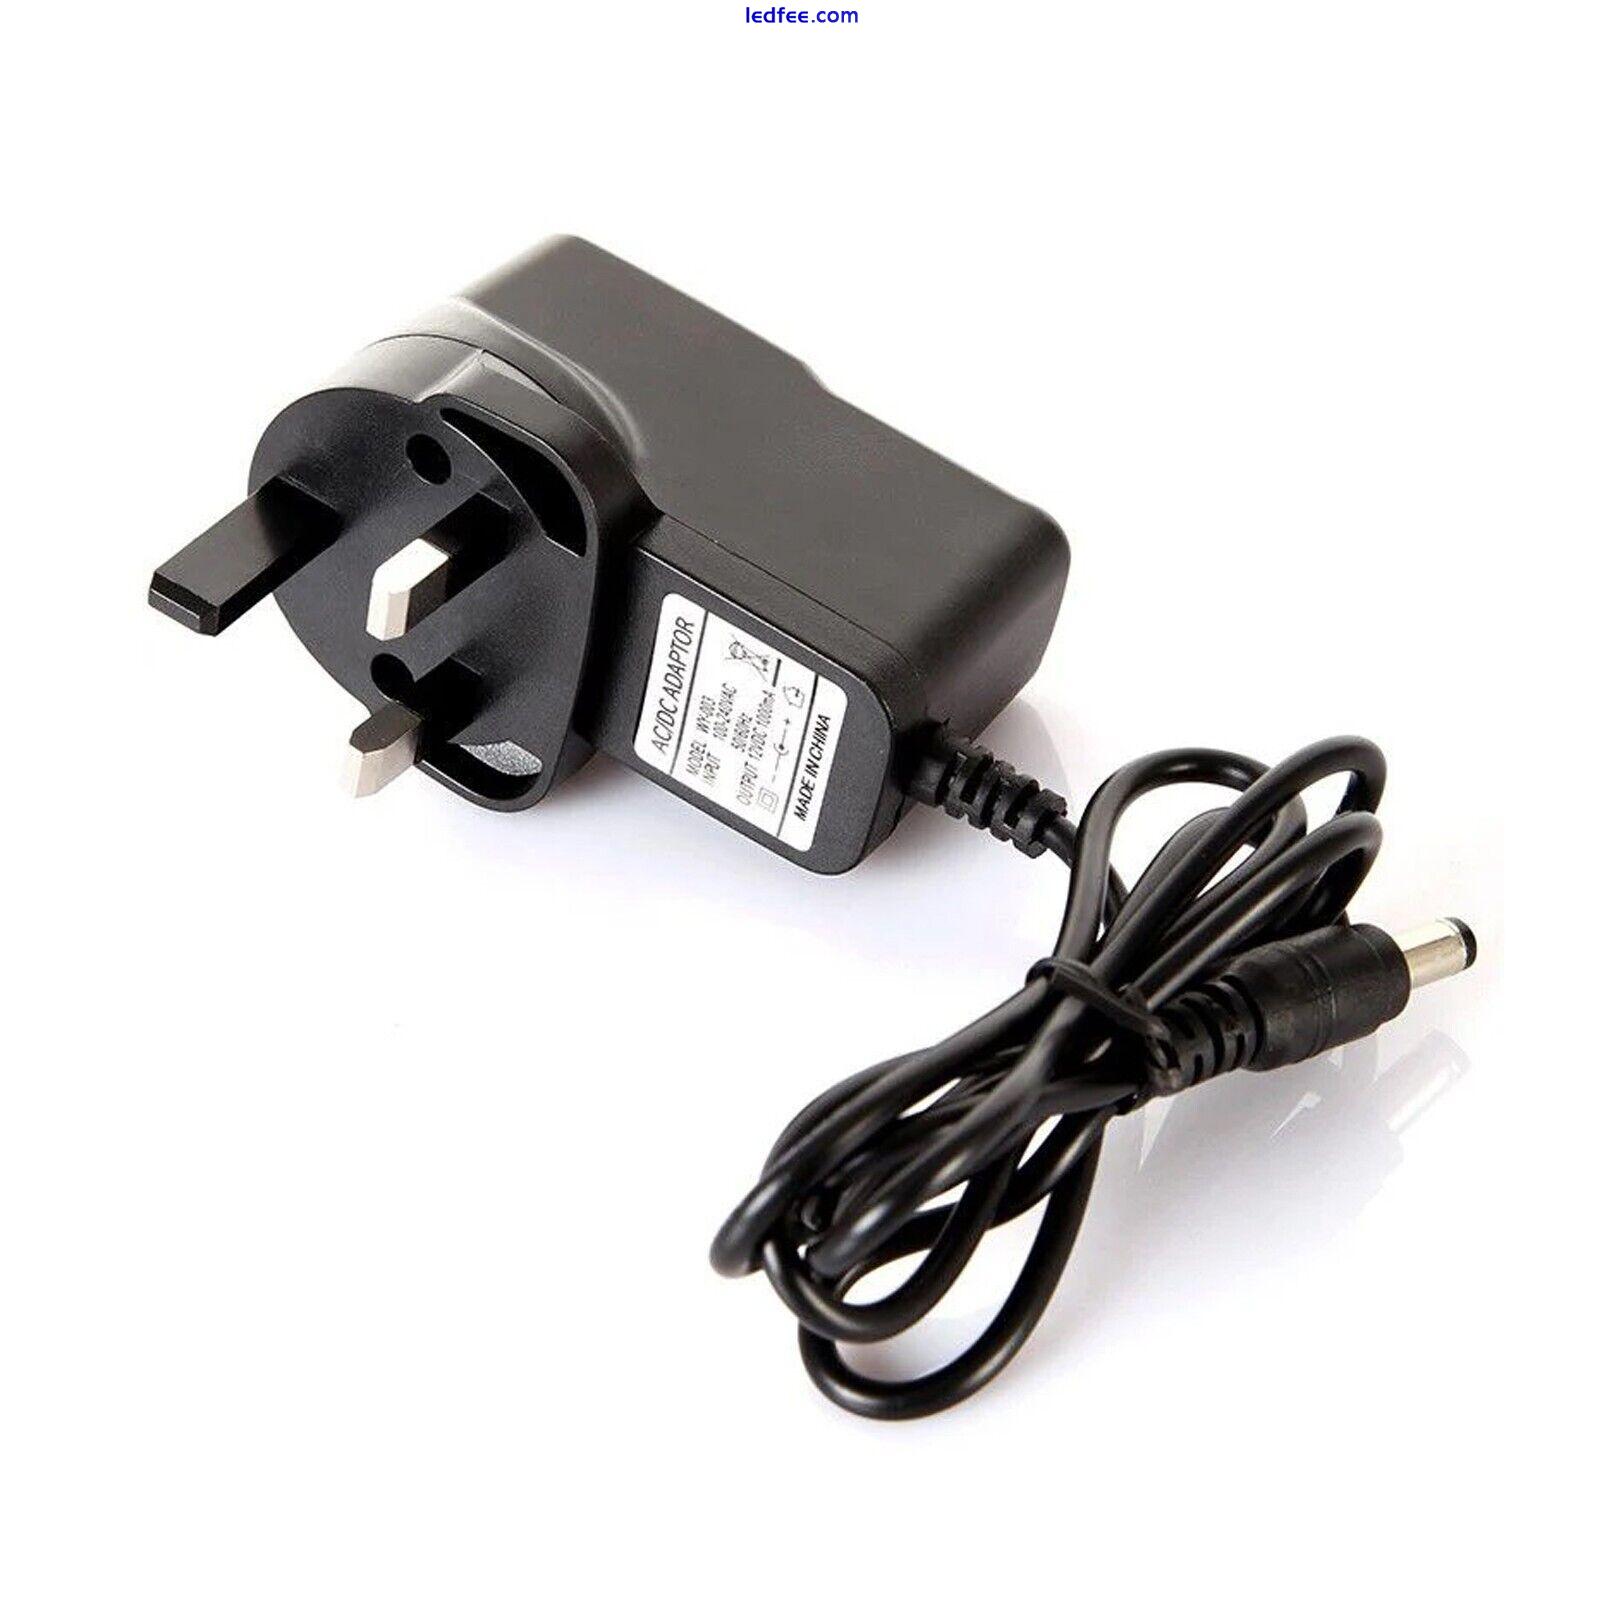 12V 1A AC / DC Adapter Charger Power Supply UK Plug for LED light CCTV Camera 4 